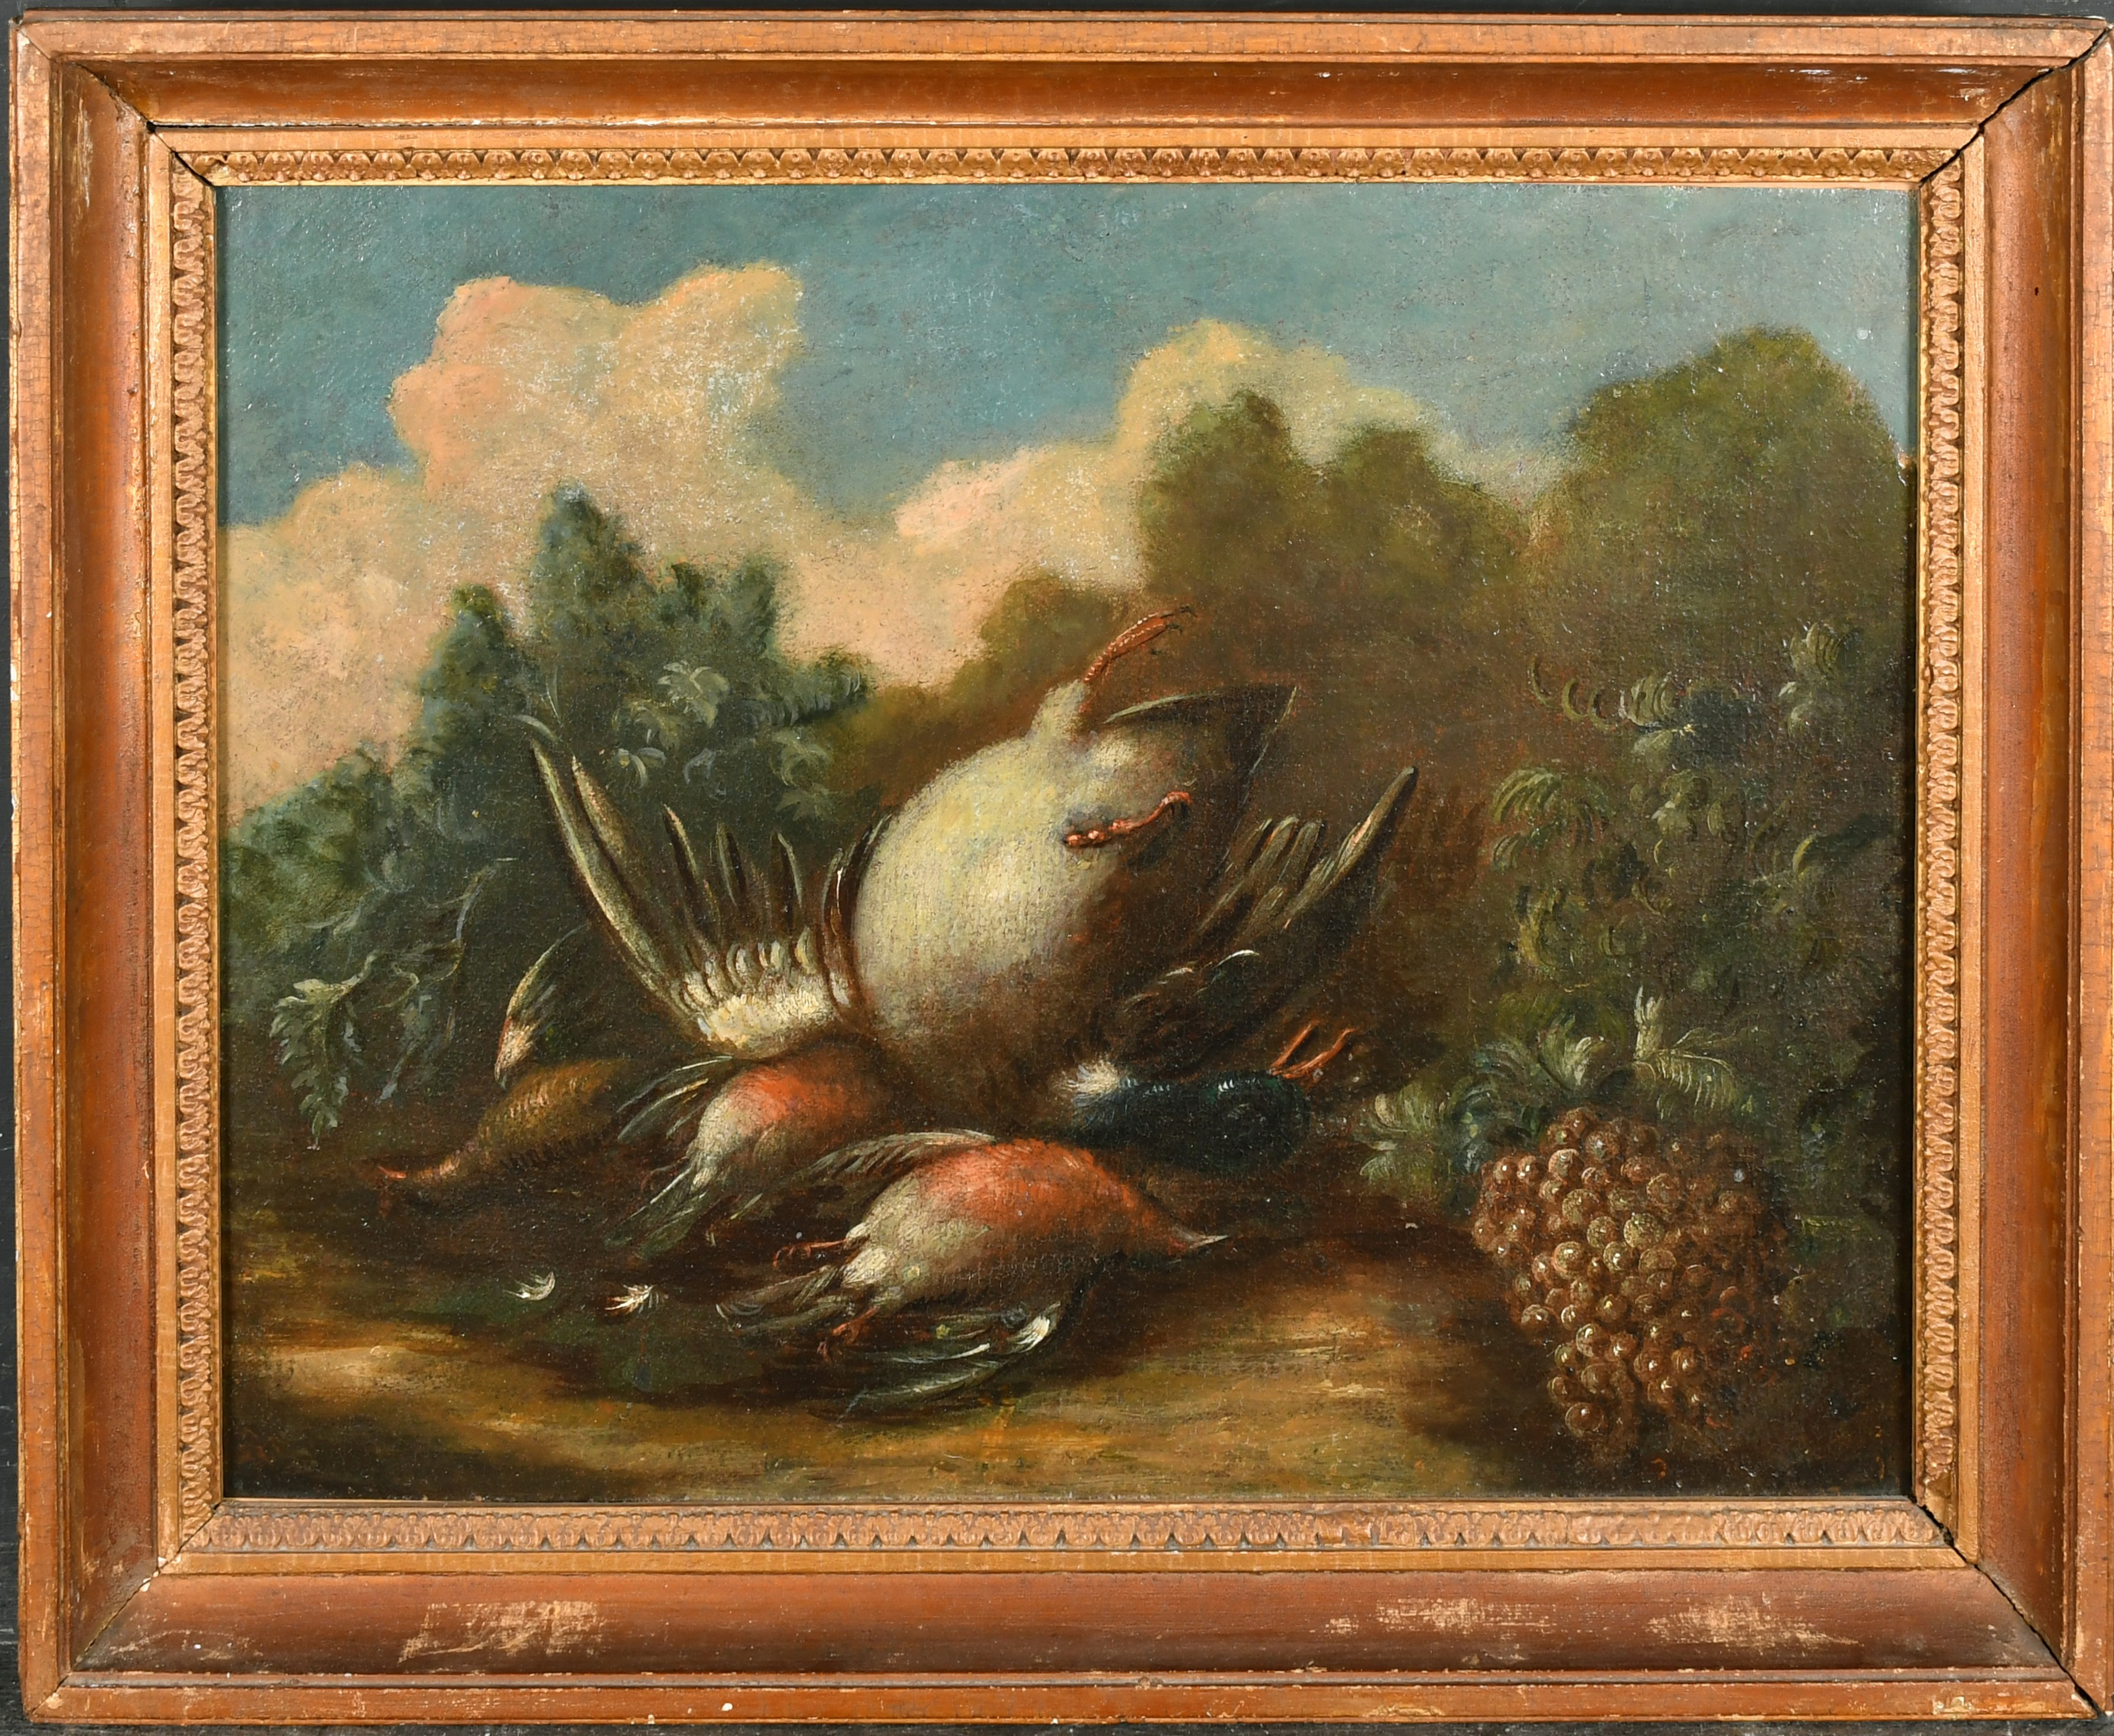 18th Century Italian School, Still Life with Dead Birds, Oil on canvas, 14.25" x 18" (36.2 x 45.7cm) - Image 2 of 3